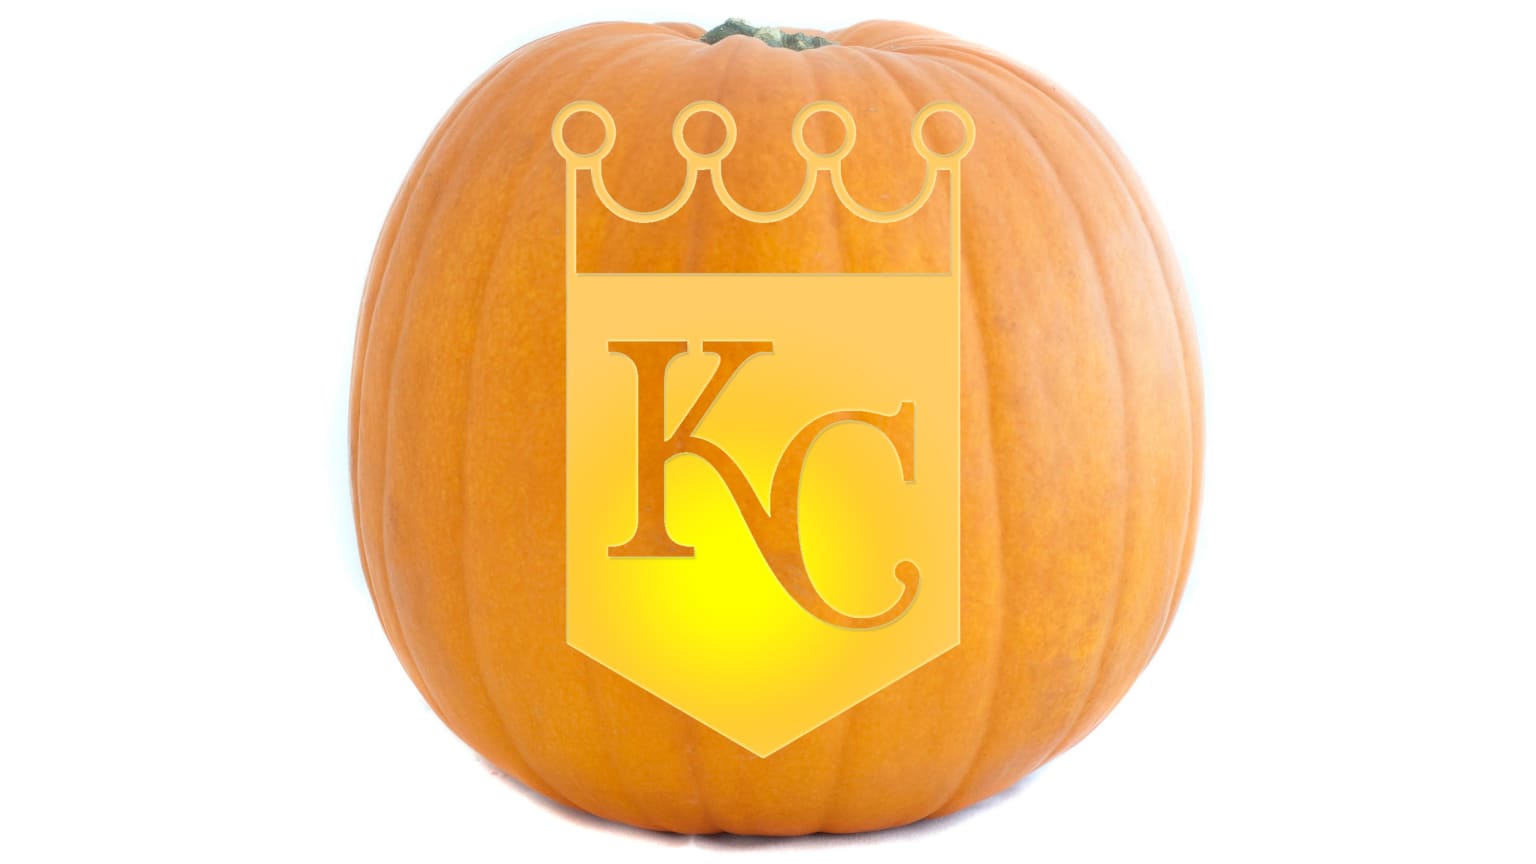 Kansas City Royals Halloween Pumpkin Shirt - High-Quality Printed